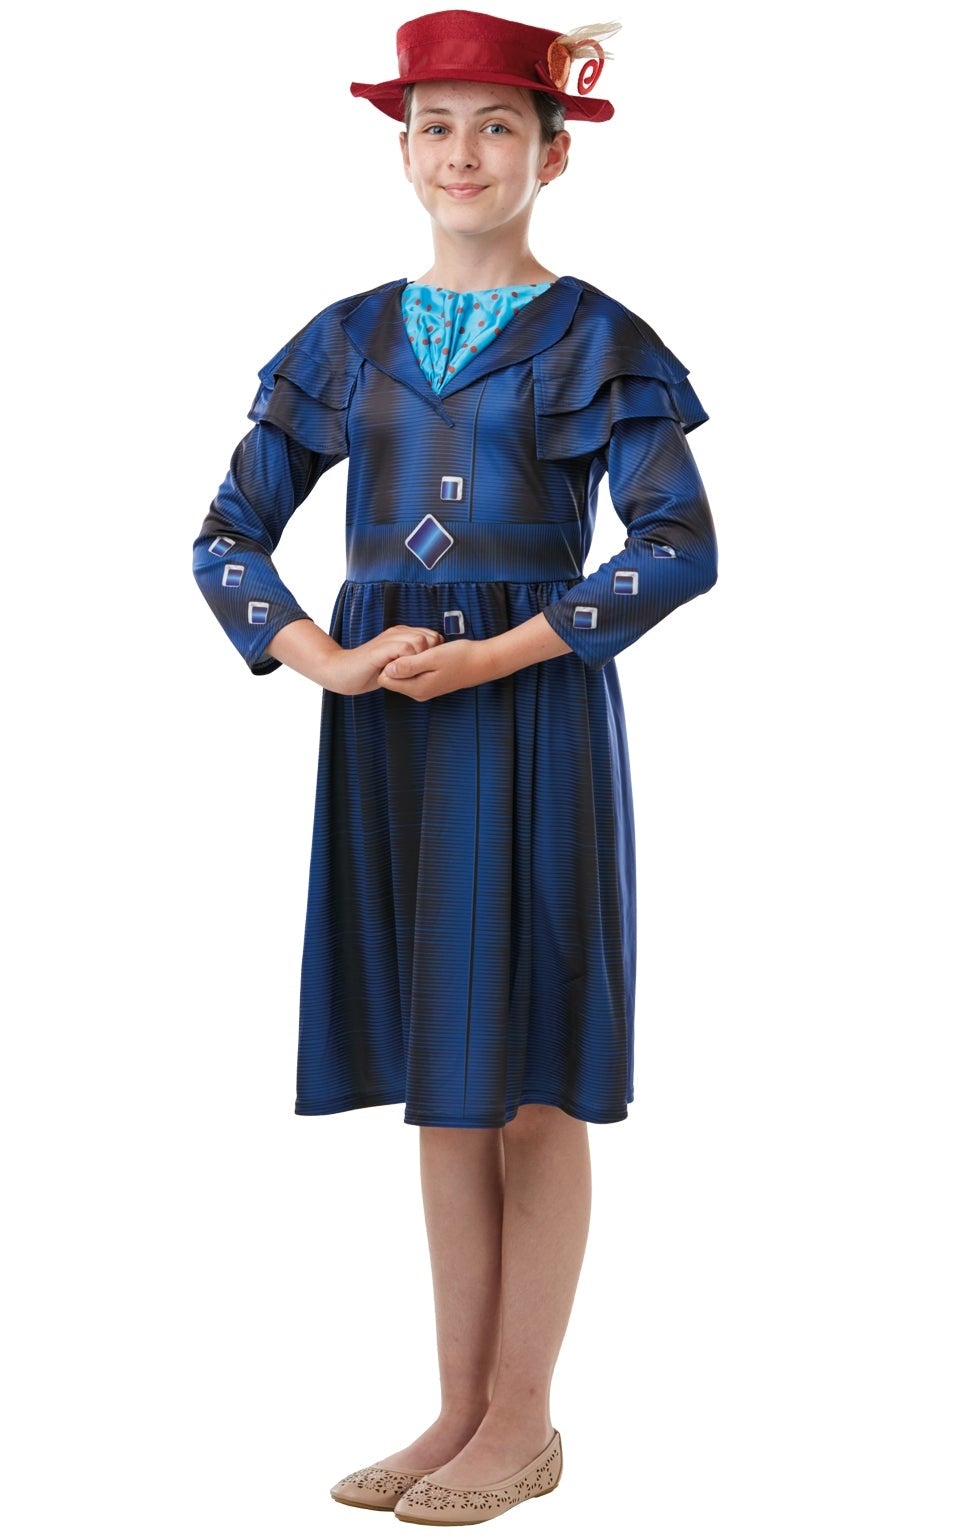 Mary Poppins Returns Costume for Girls_1